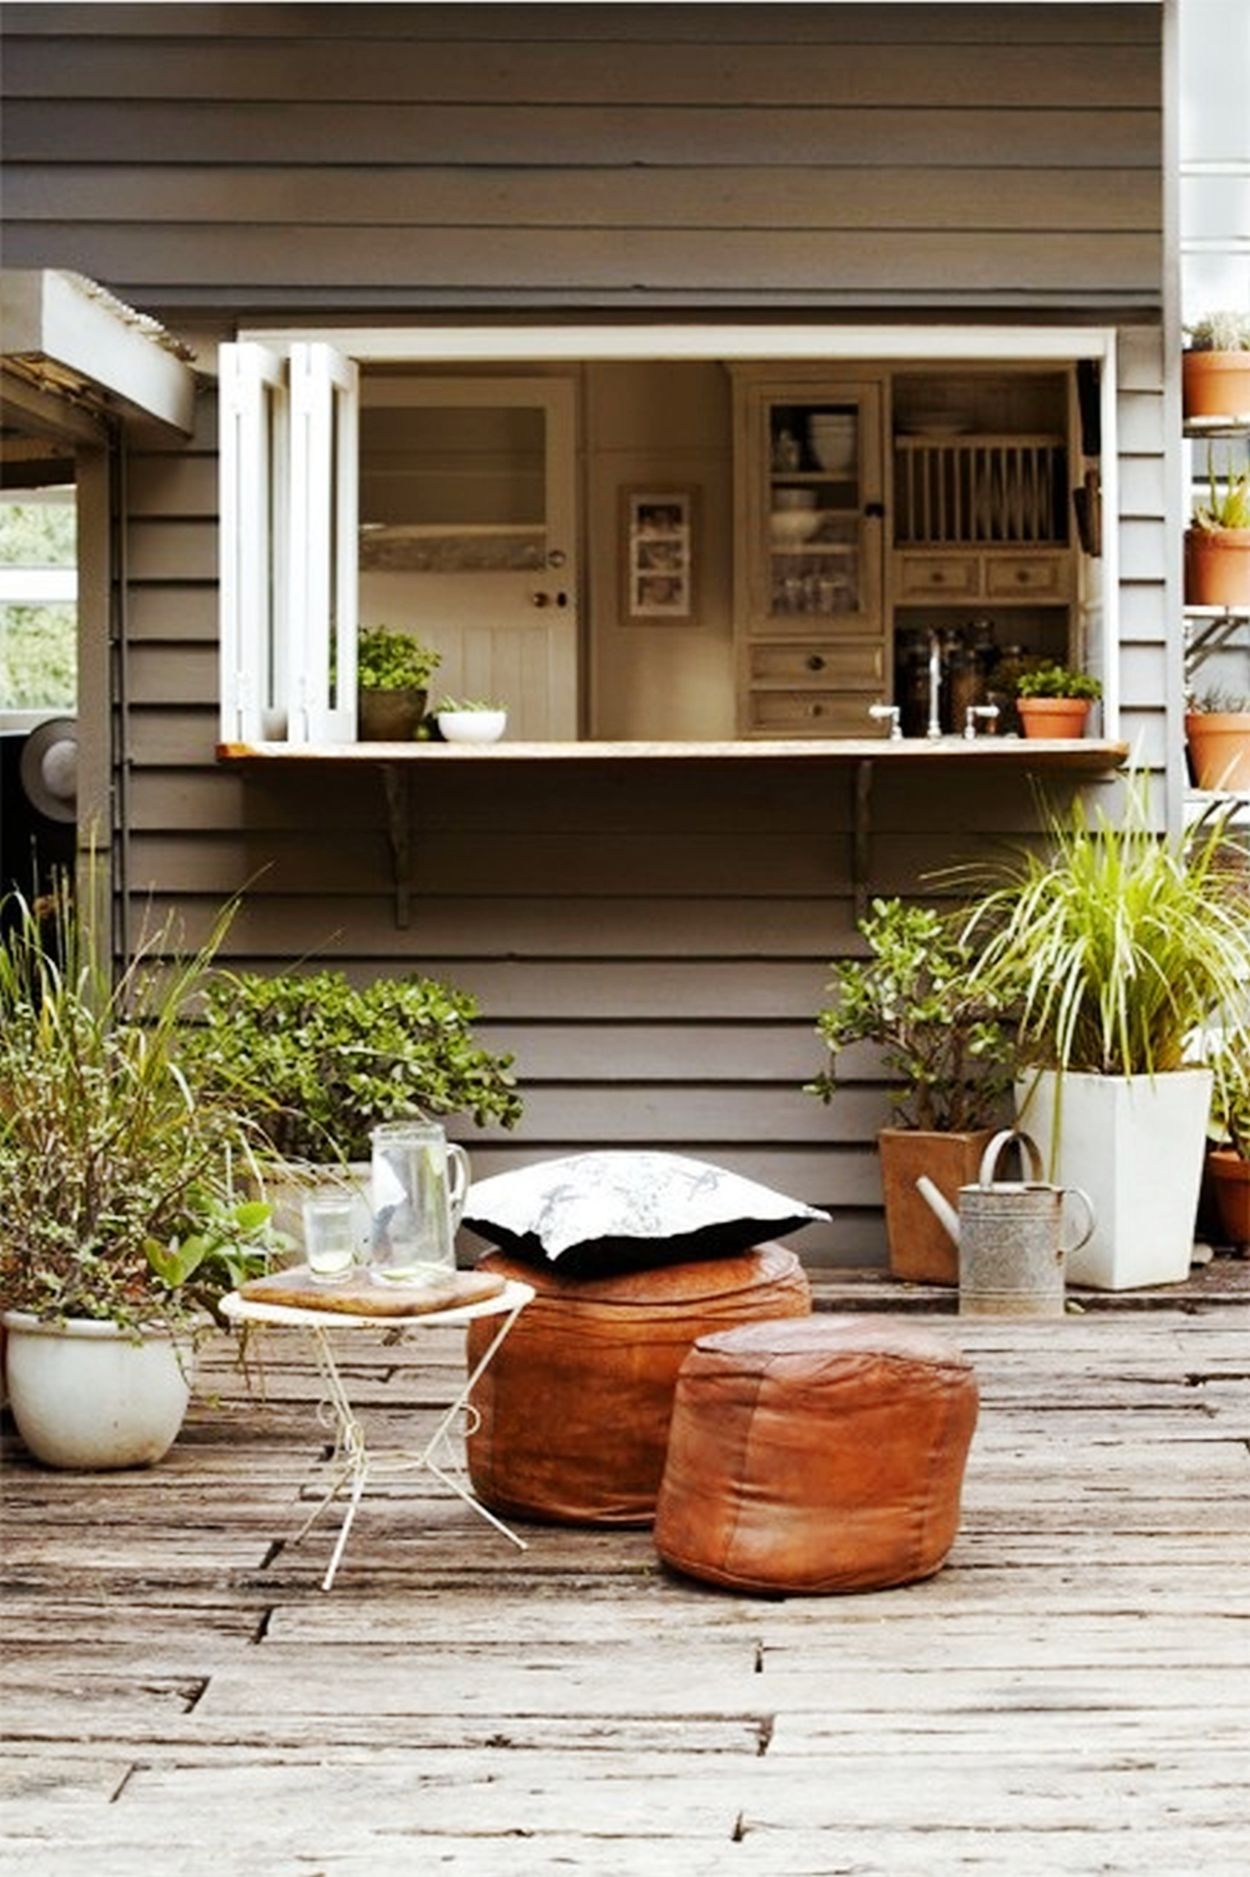 31 Inspirational Outdoor Interior Design Ideas Pictures